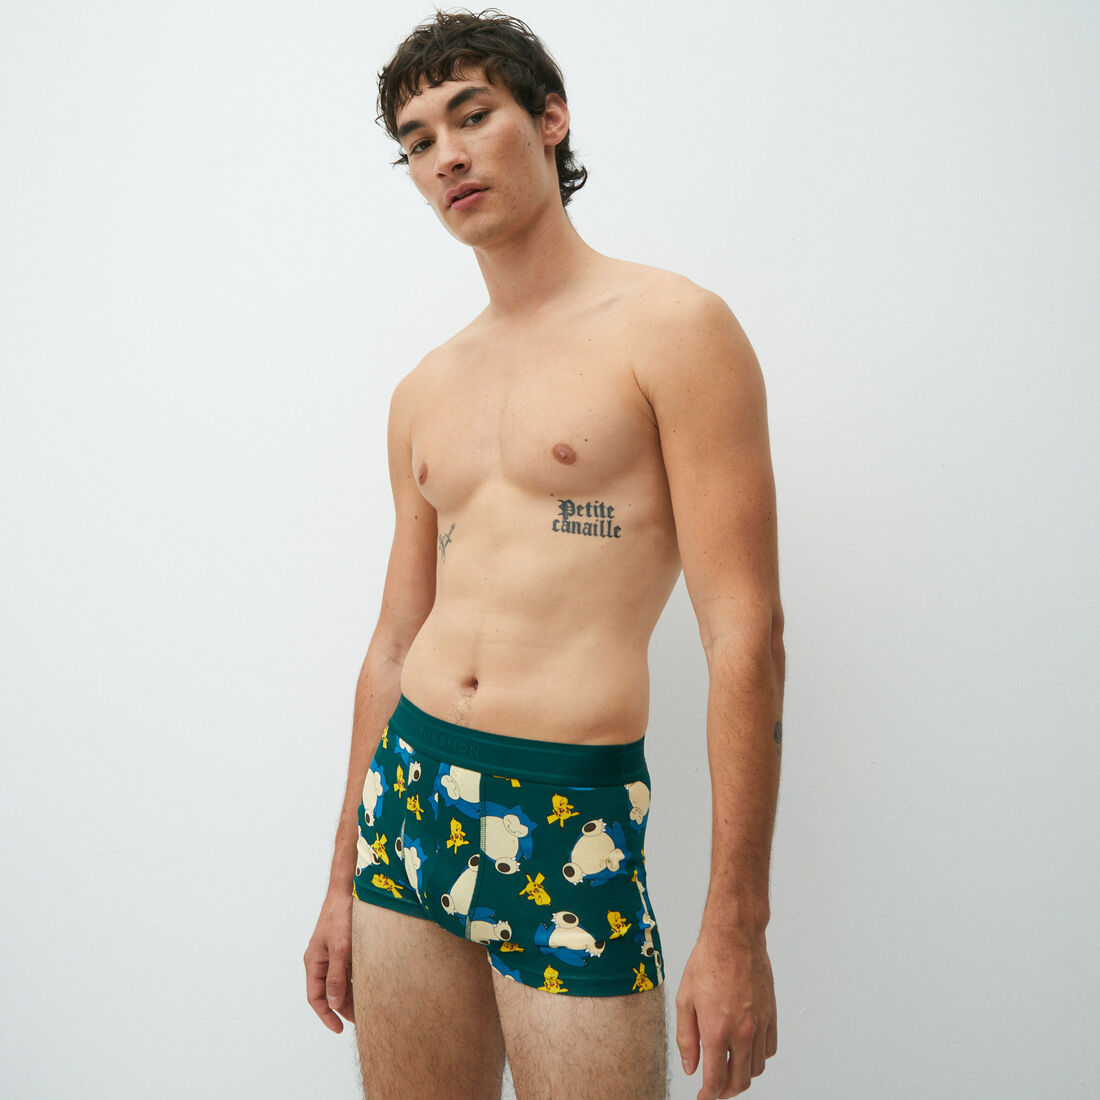 Pikachu print boxer shorts;